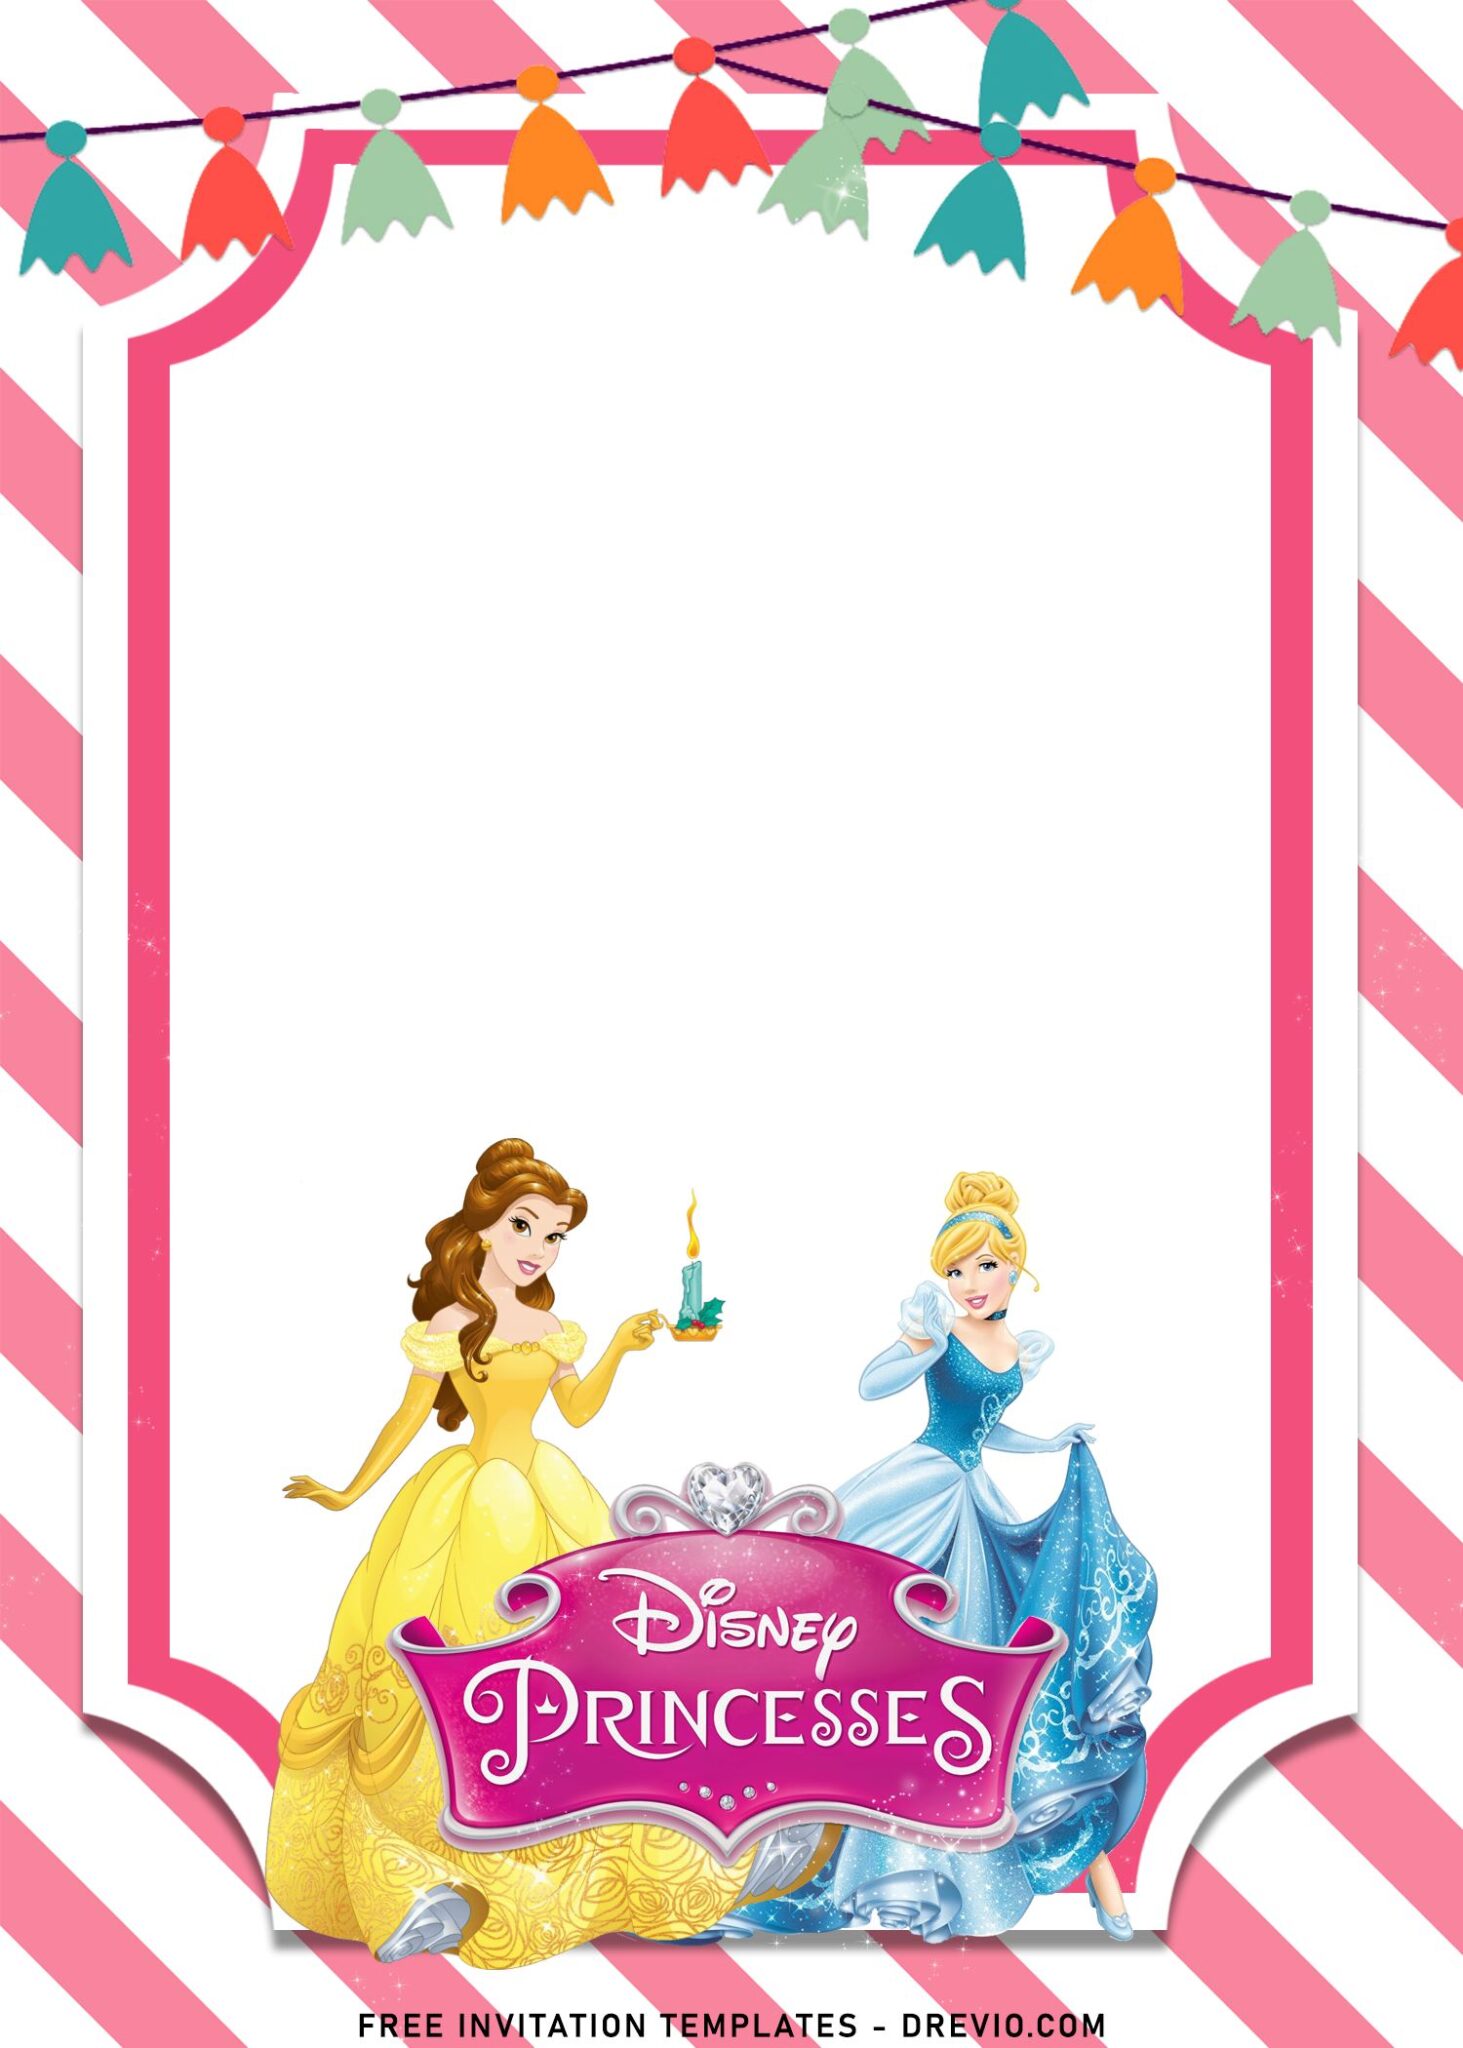 9+ Disney Princess And Castle Birthday Invitation Templates | Download ...